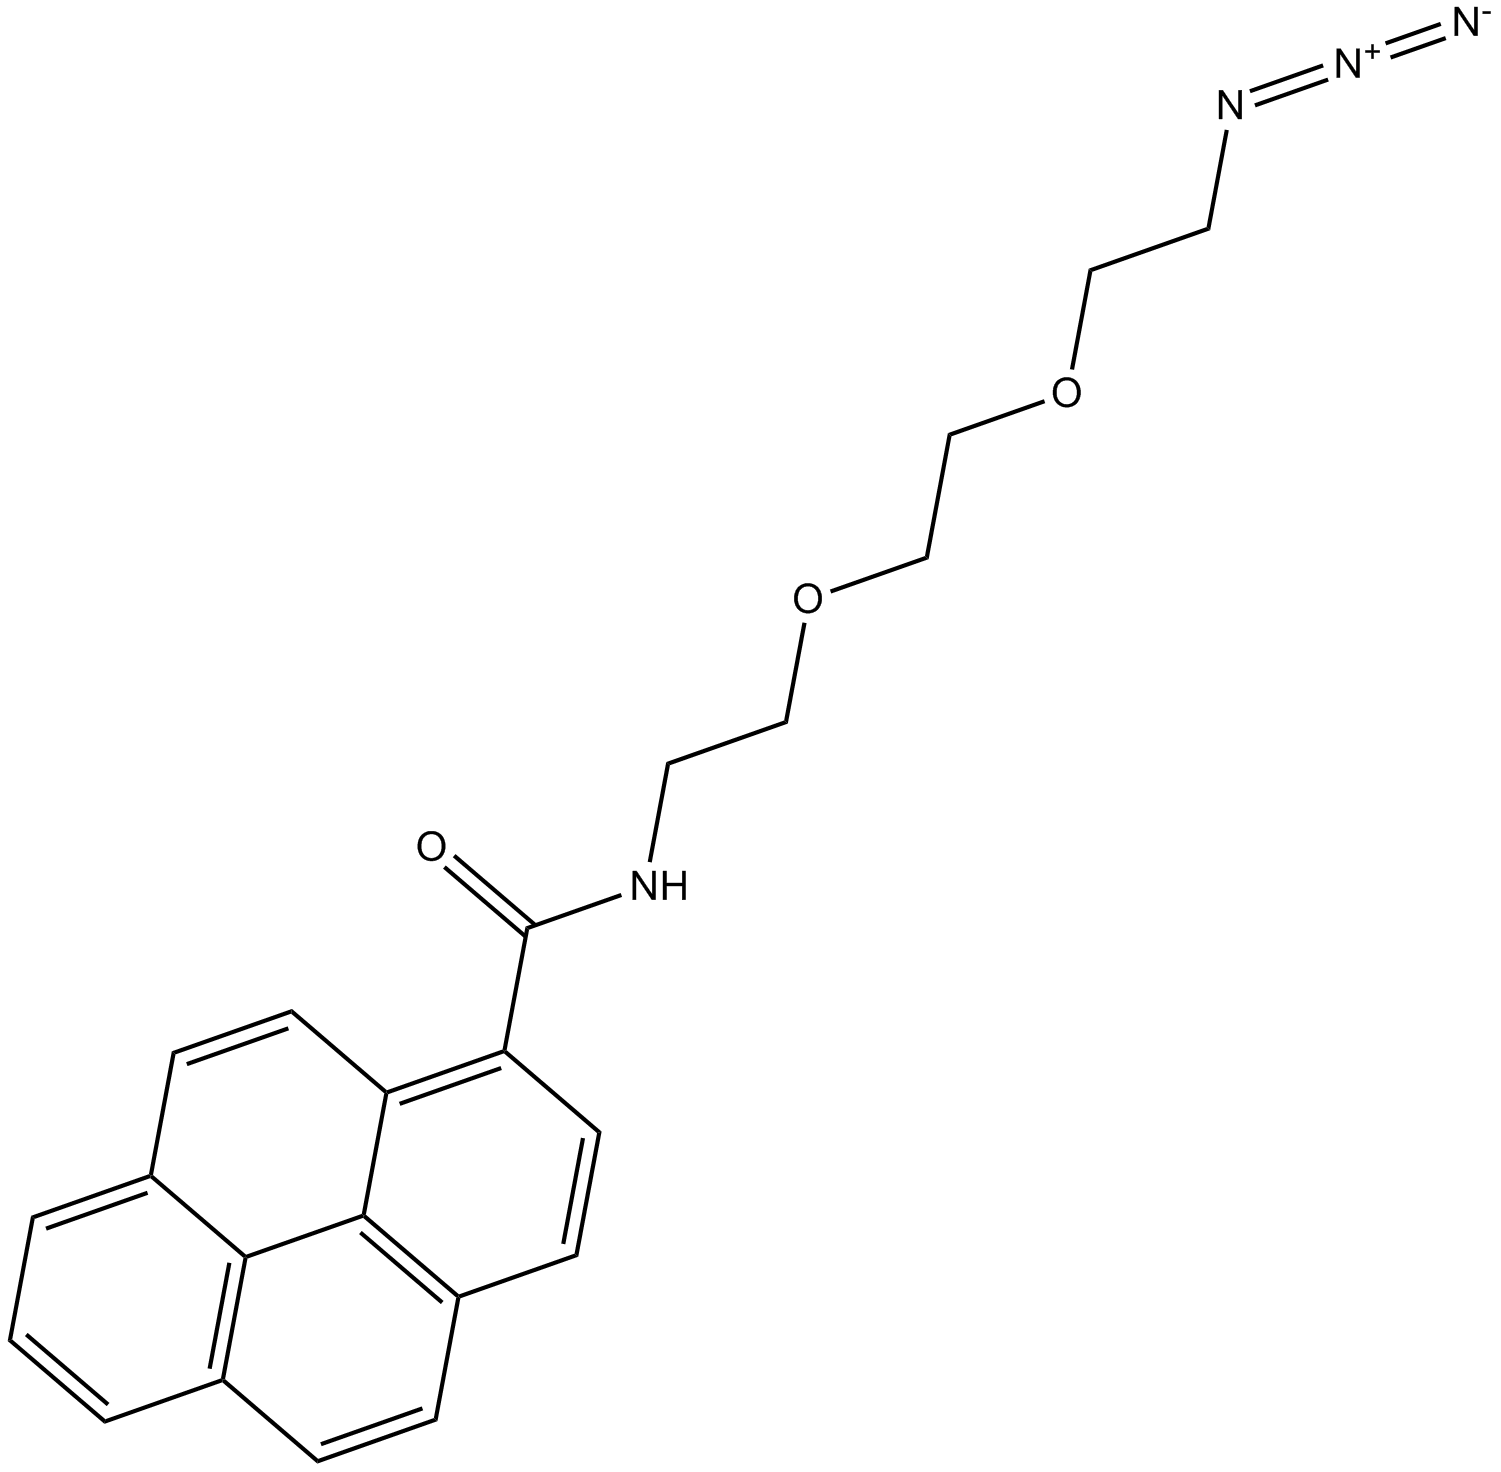 Pyrene azide 1 التركيب الكيميائي